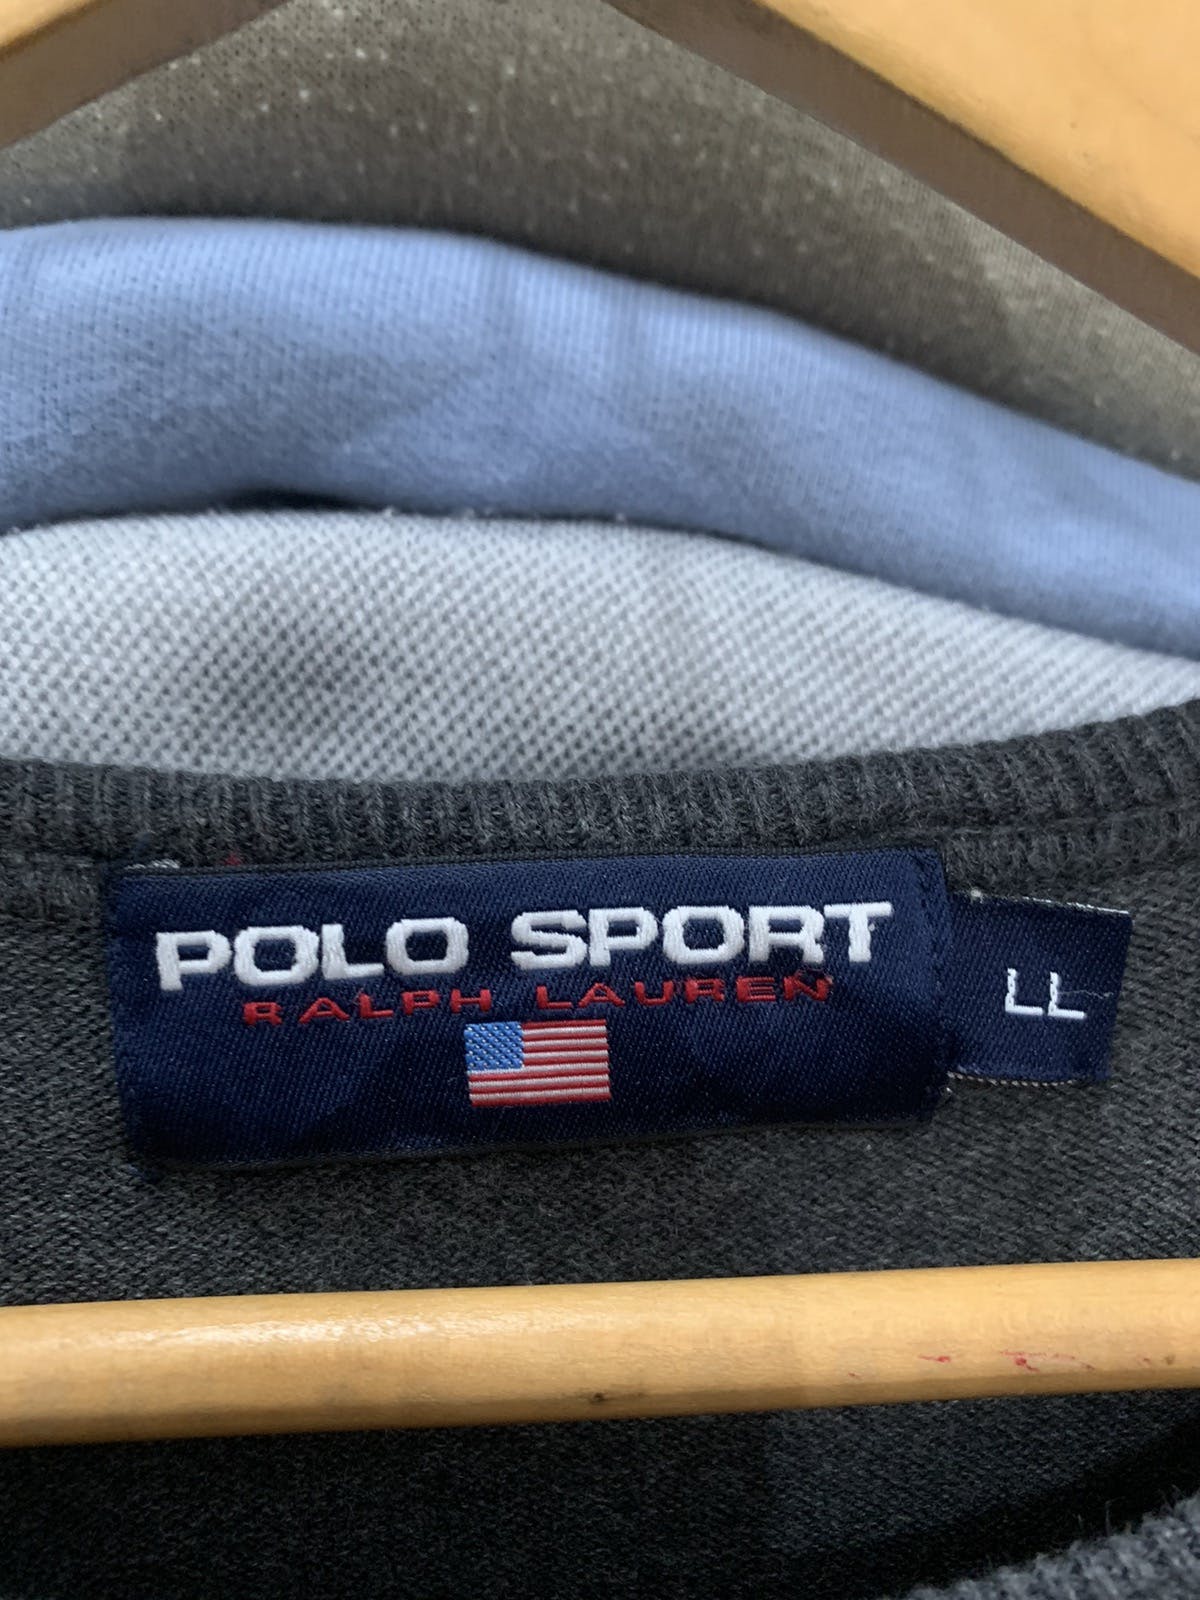 Polo Ralph Lauren - Vintage polo sport ralph laurent shirt - 7